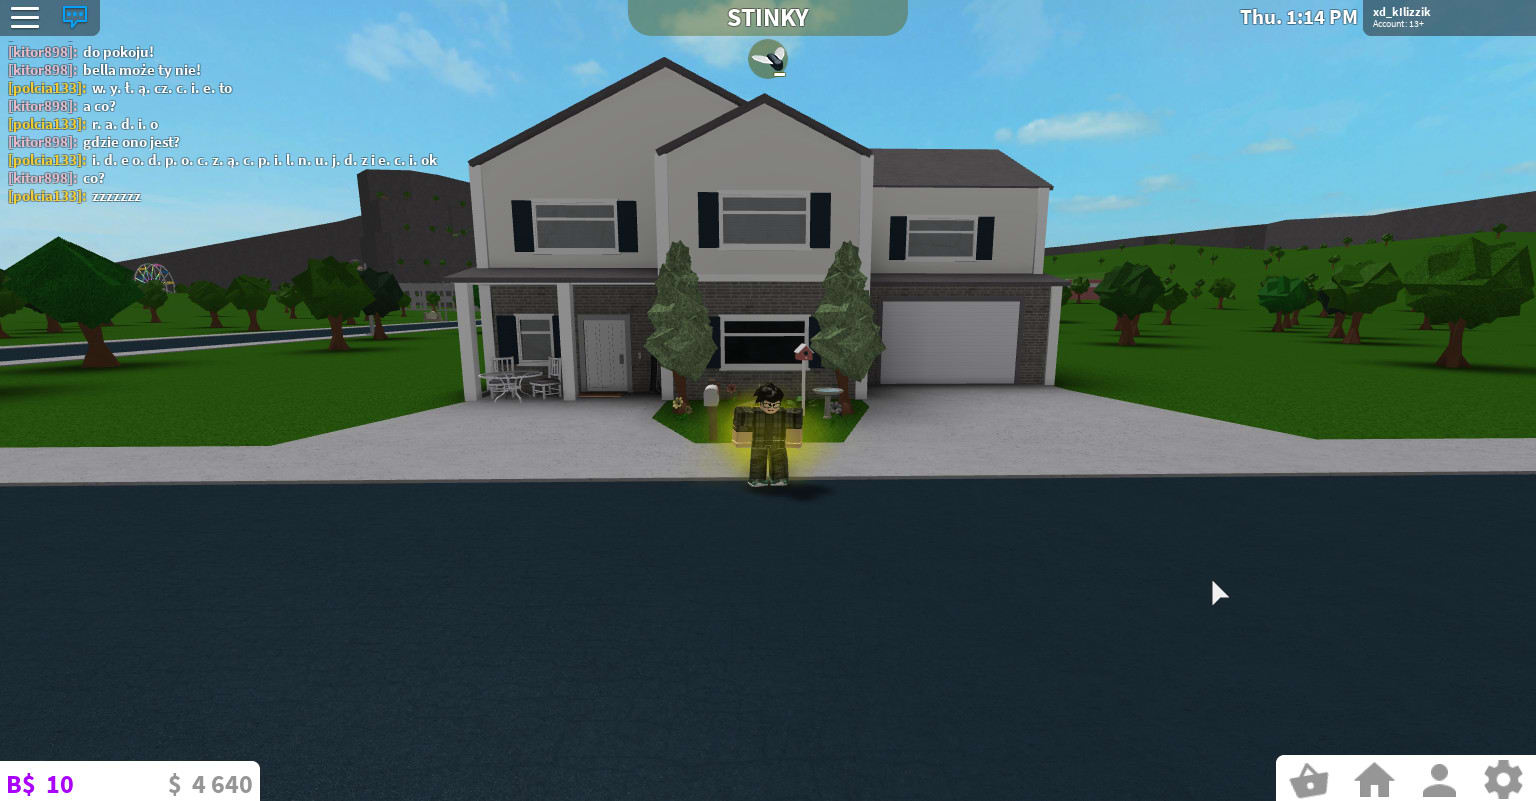 Build You A House In Bloxburg Roblox By Fortnitenuoogit - 10 fortnite games in roblox like bloxburg homes